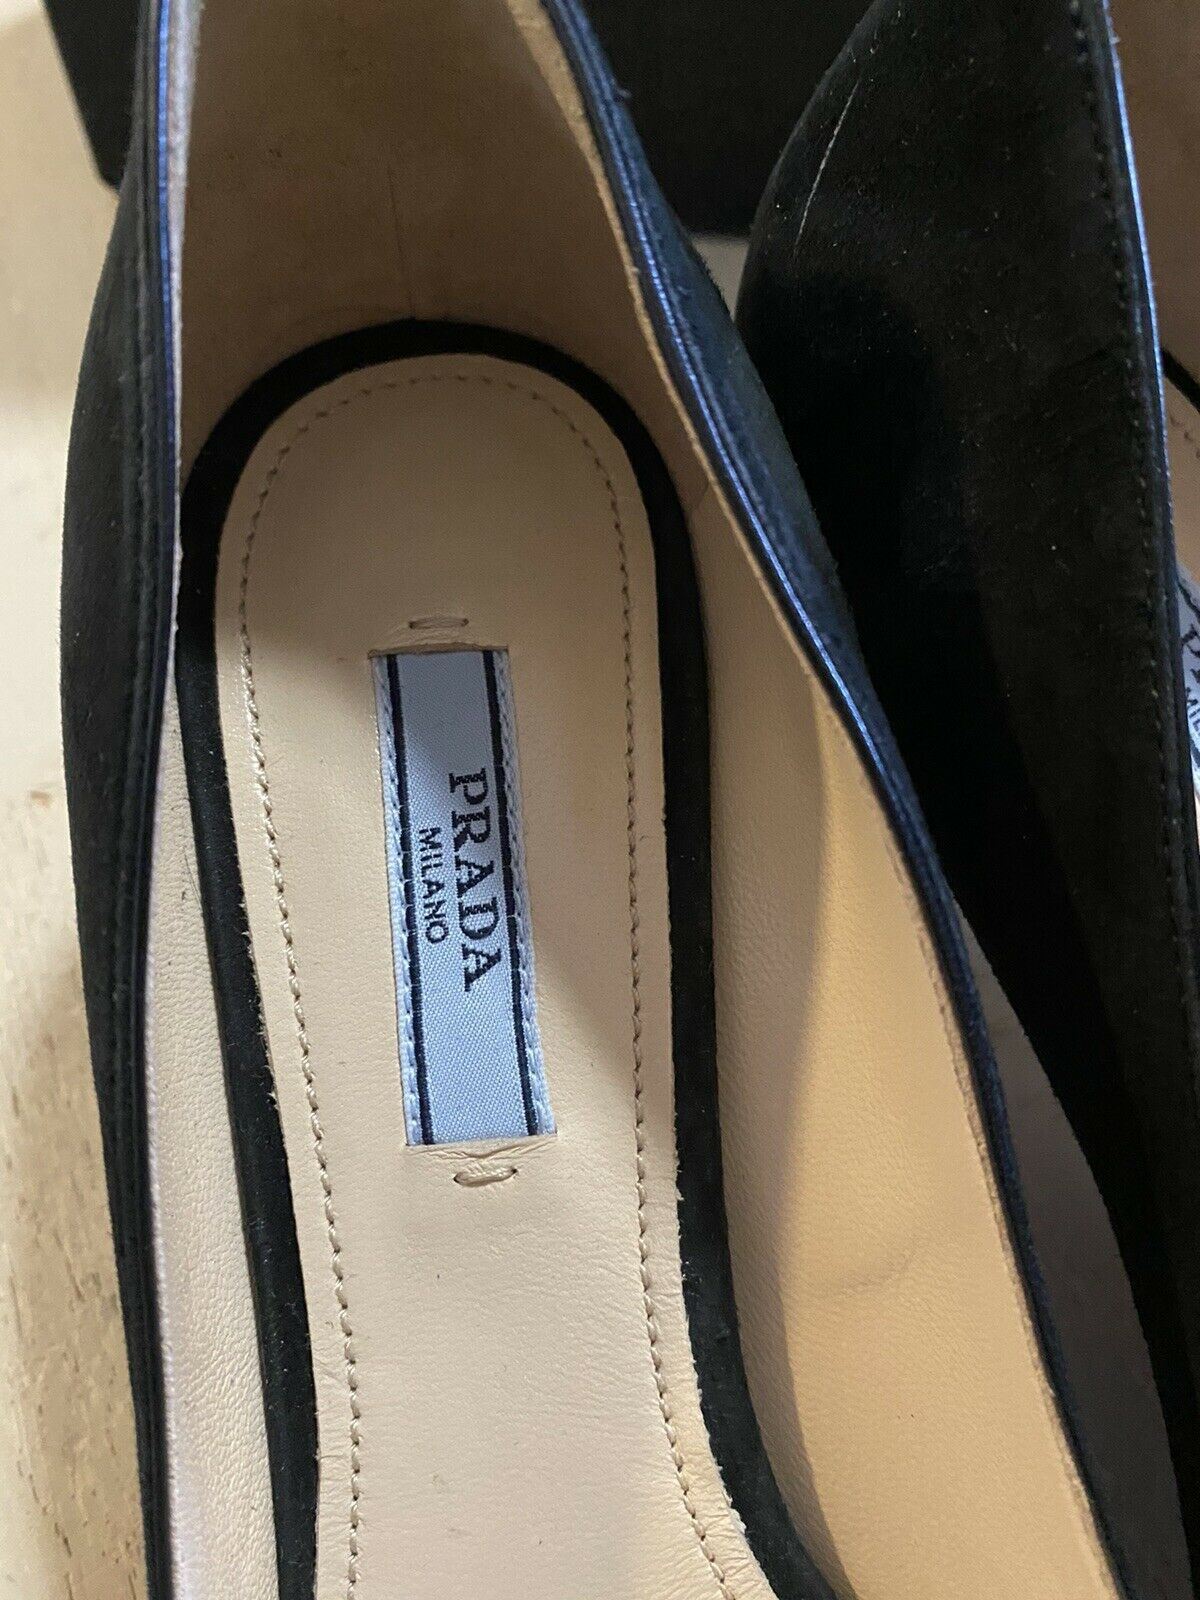 NIB $750 PRADA Women Scallop Suede Pumps Shoes Black 8 US/38 Eu Italy